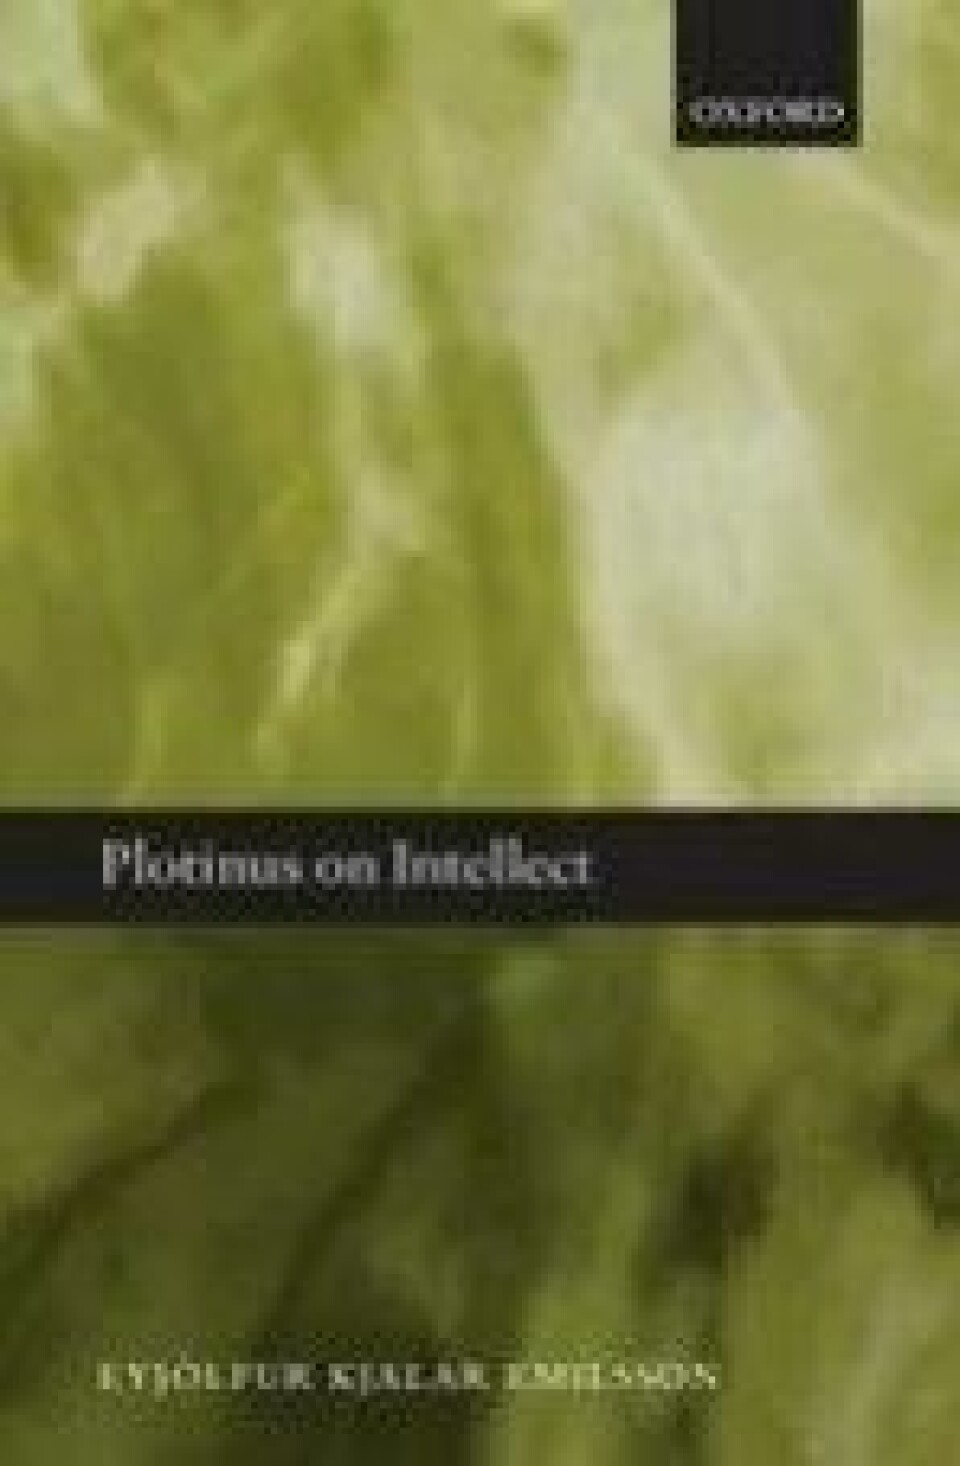 I 2007 utkom monografien Plotinus on Intellect på Clarendon Press.